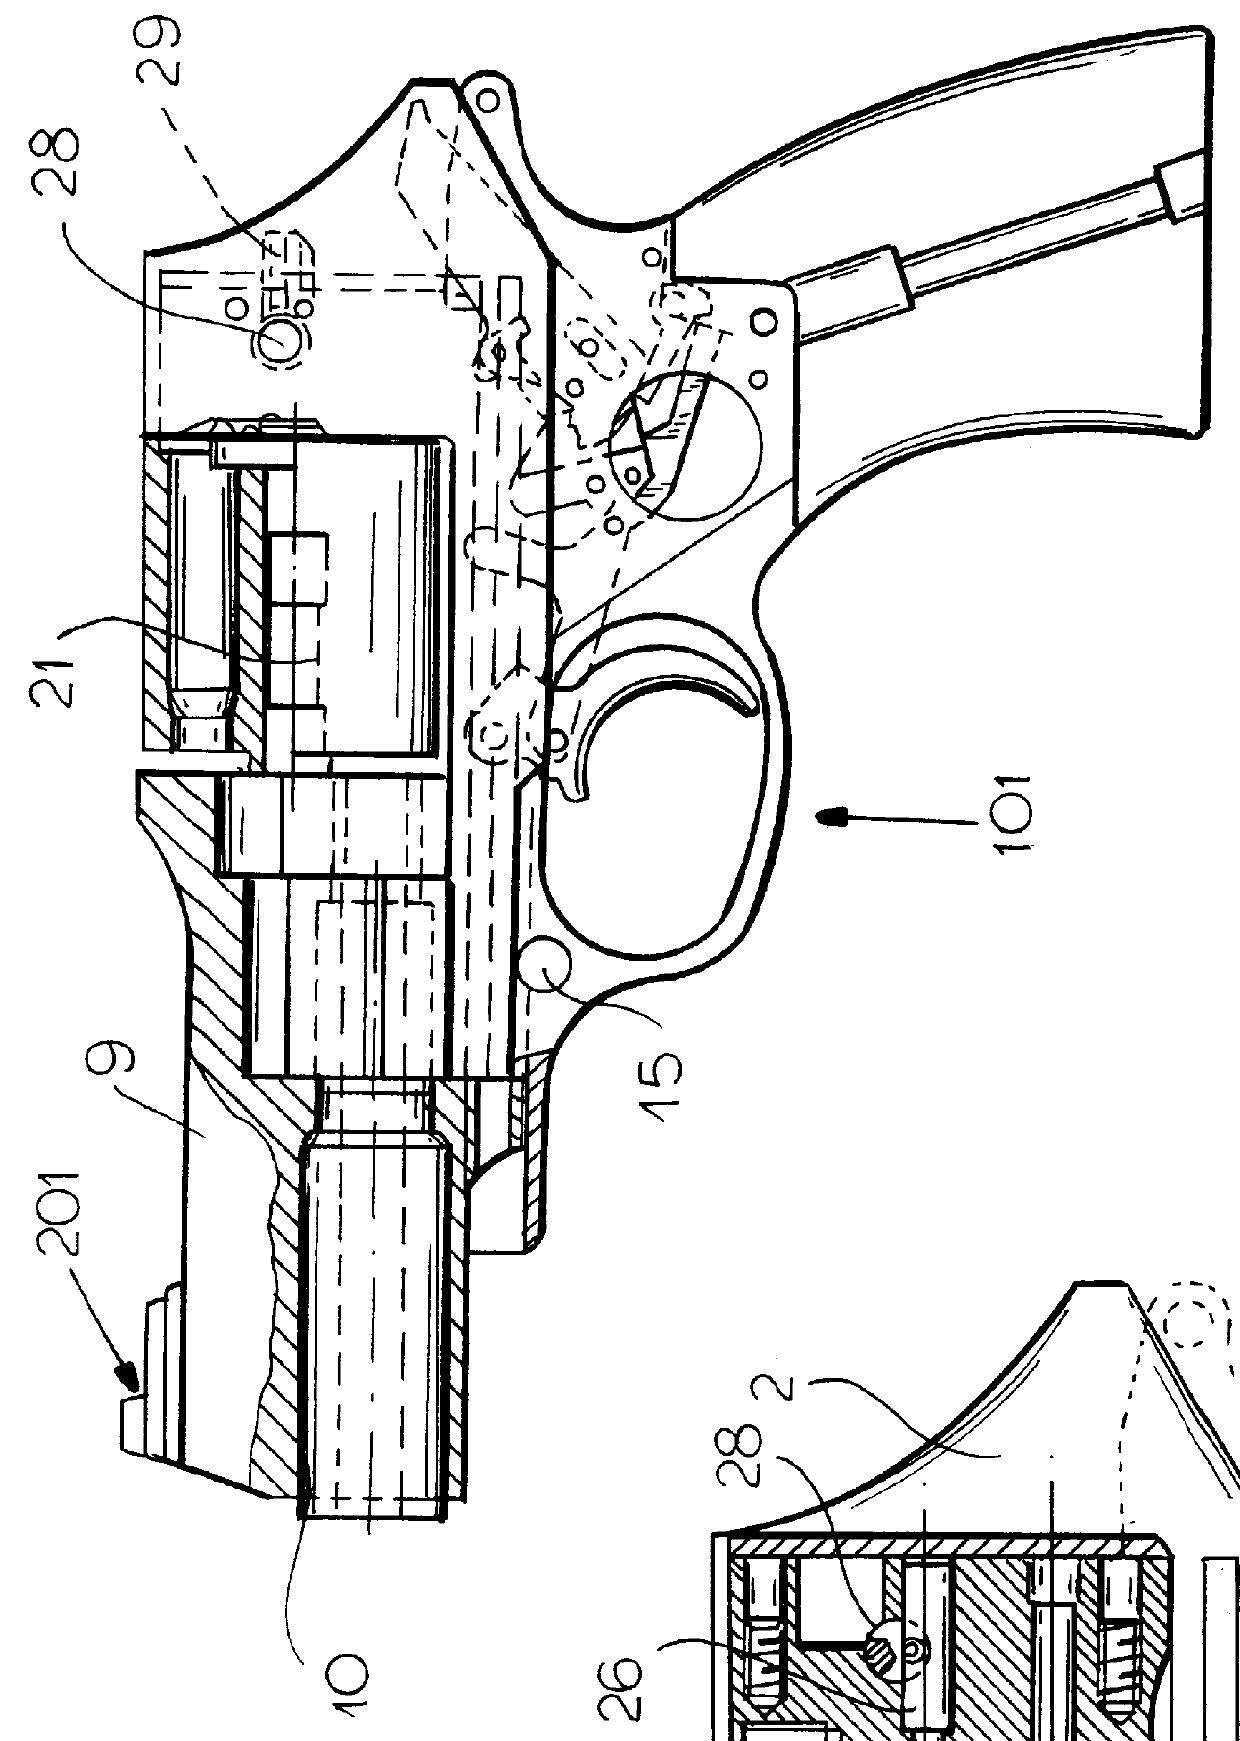 Firearm, particularly a revolver pistol